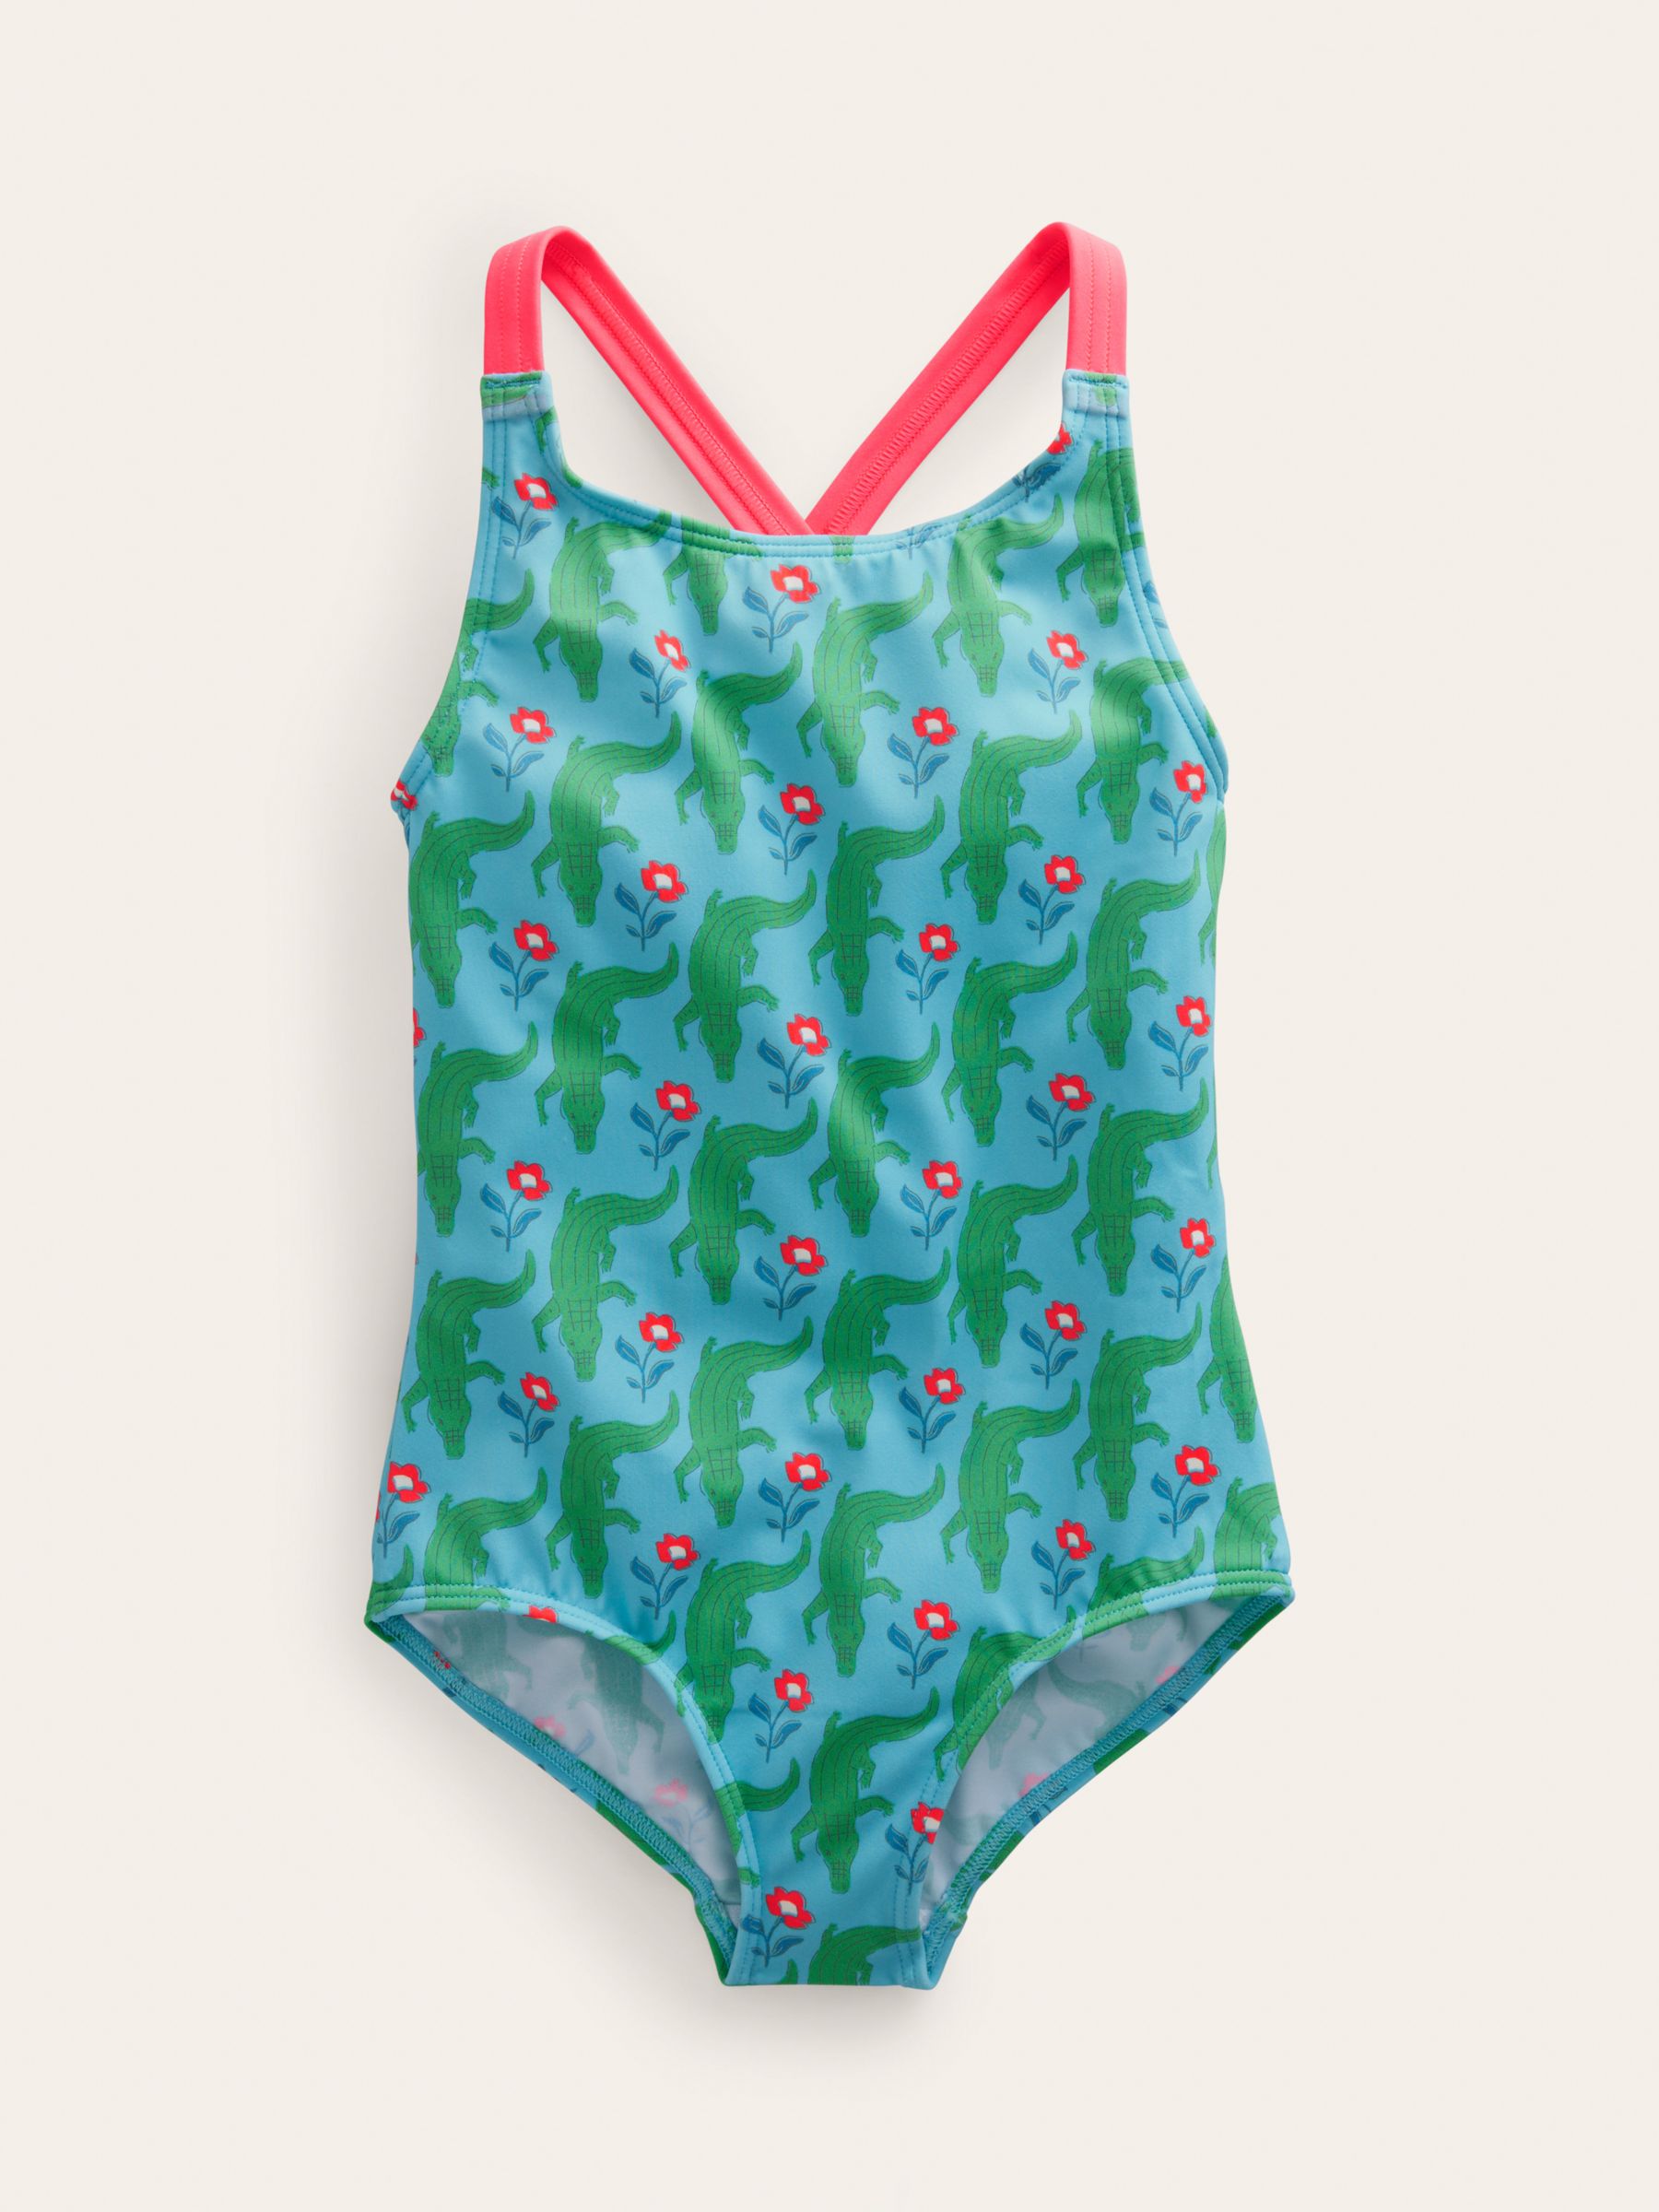 Mini Boden Kids' Cross Back Crocodile Print Swimsuit, Aqua, 2-3 years